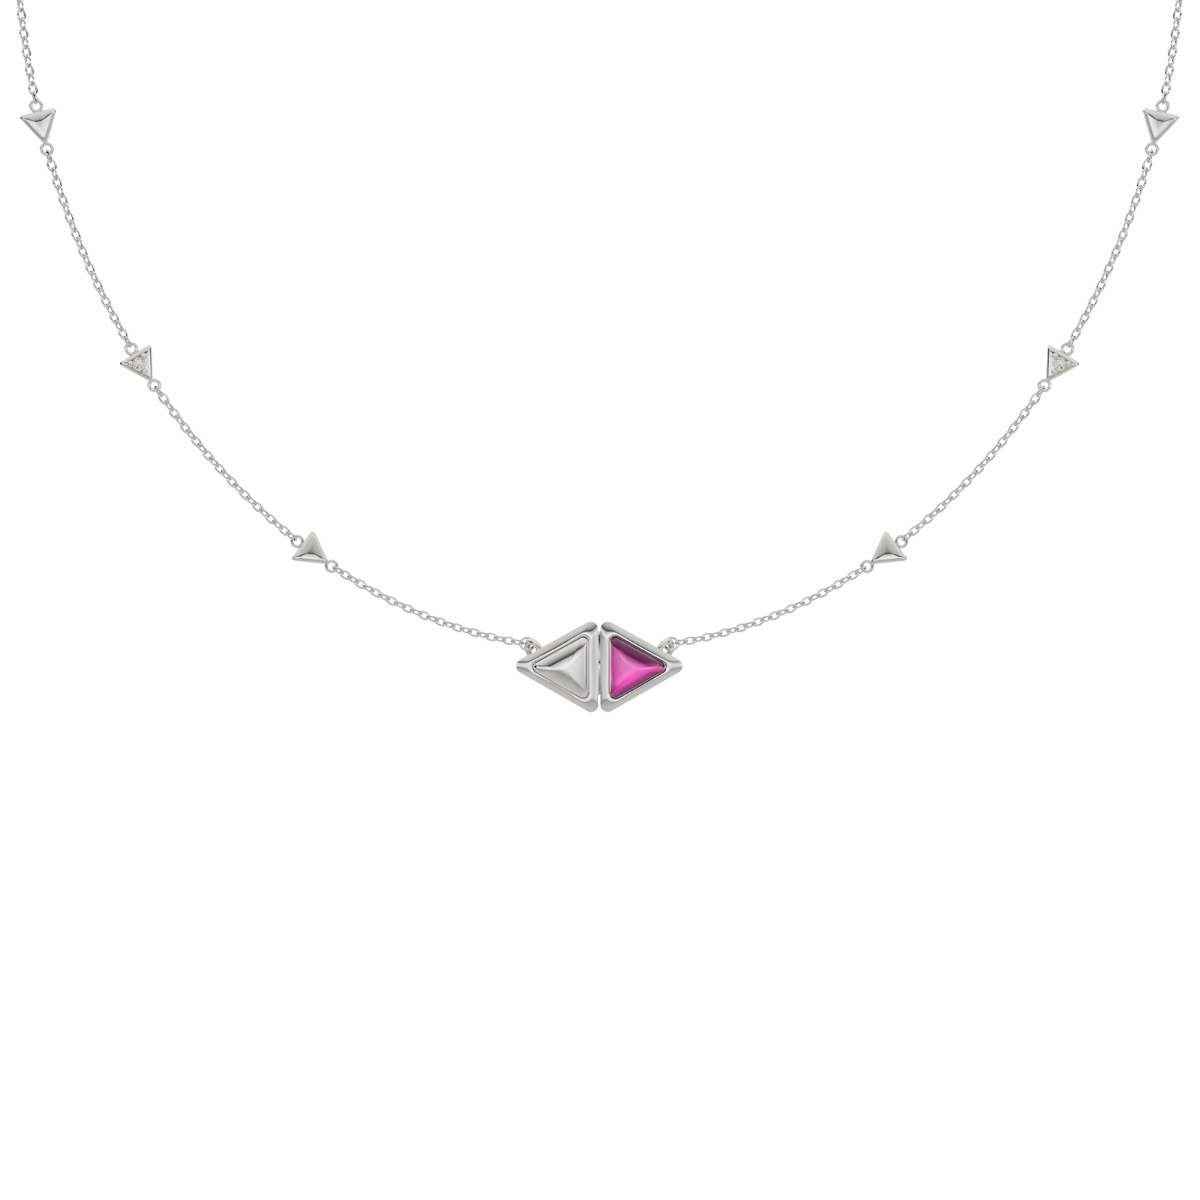 Mirror Necklace with Pink Garnet